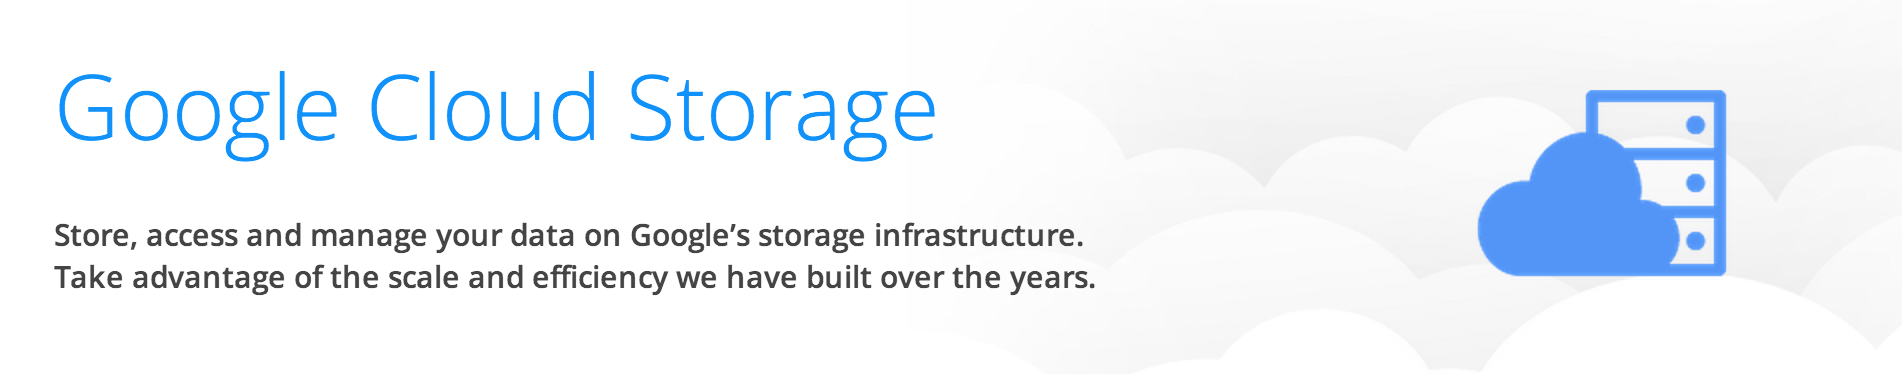 Google-Cloud-Storage